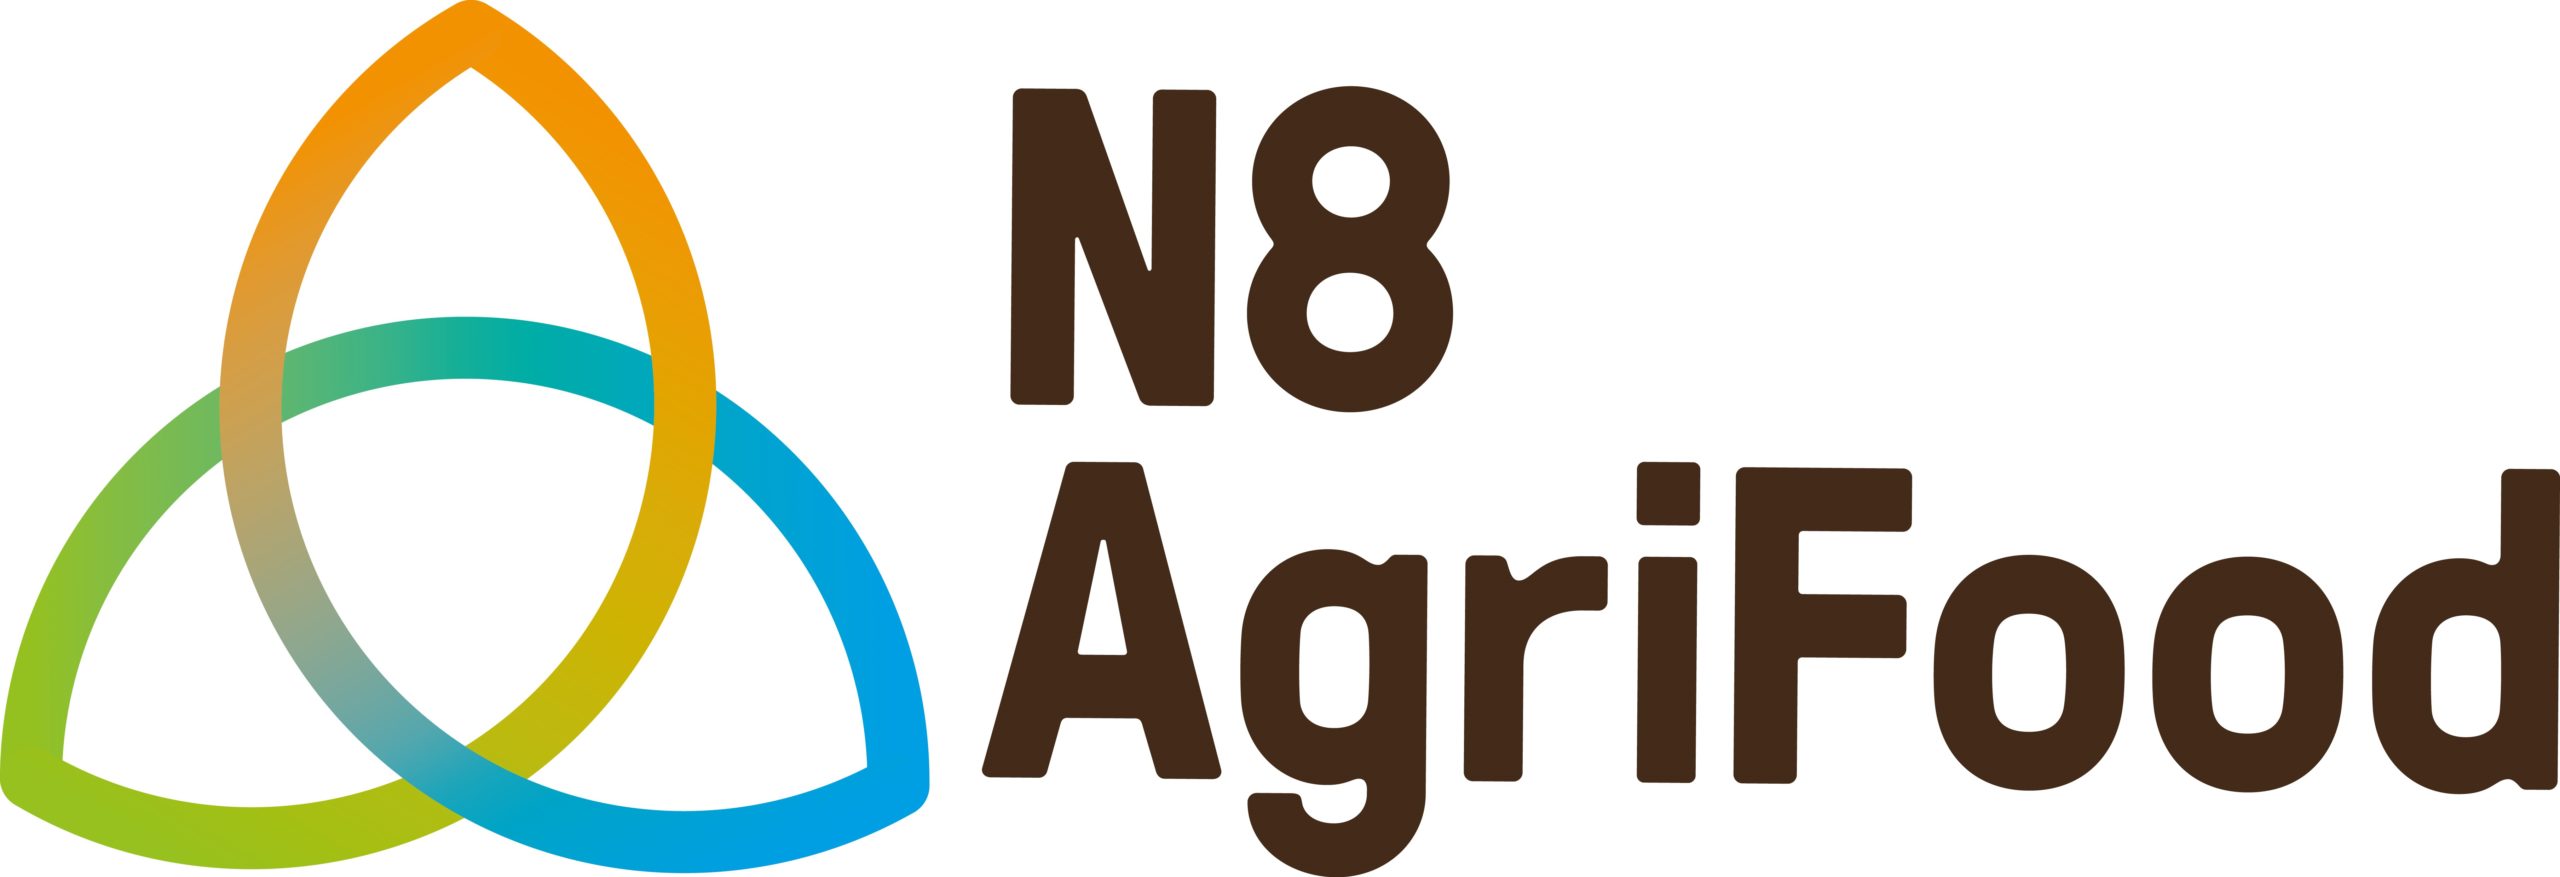 N8 Agrifood logo